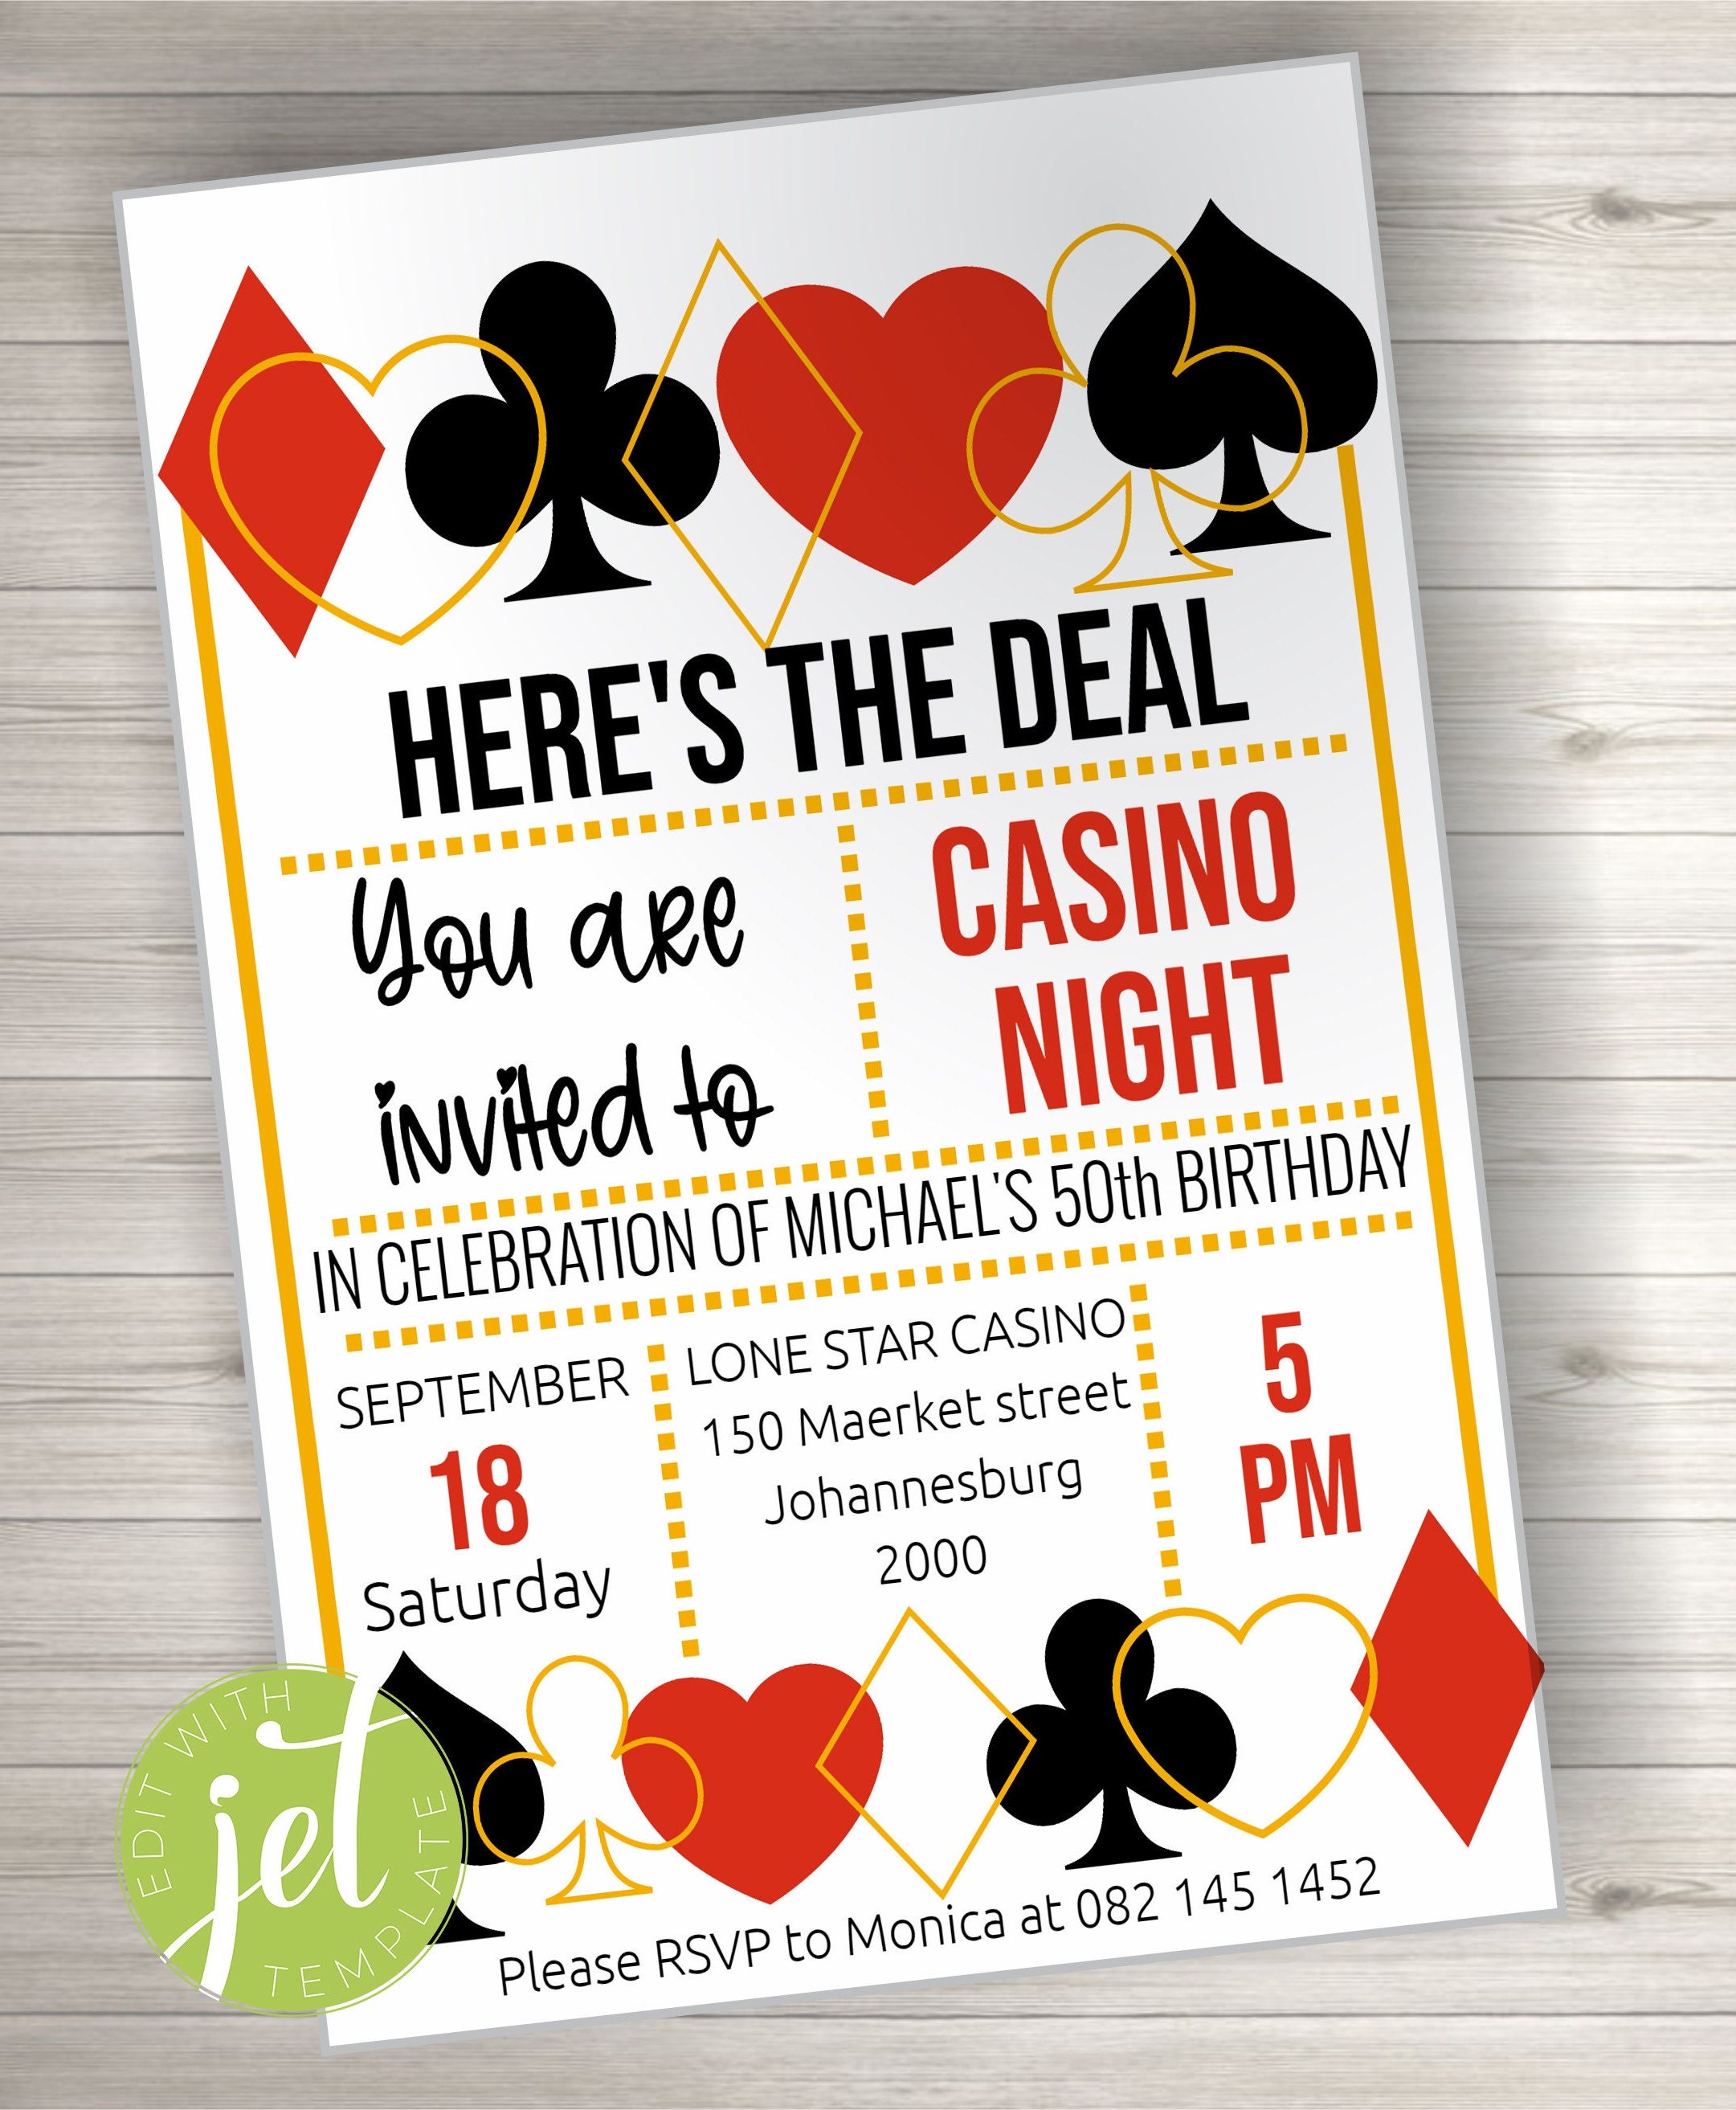 Las Vegas Casino Party Centerpiece & Table Decoration Kit Poker